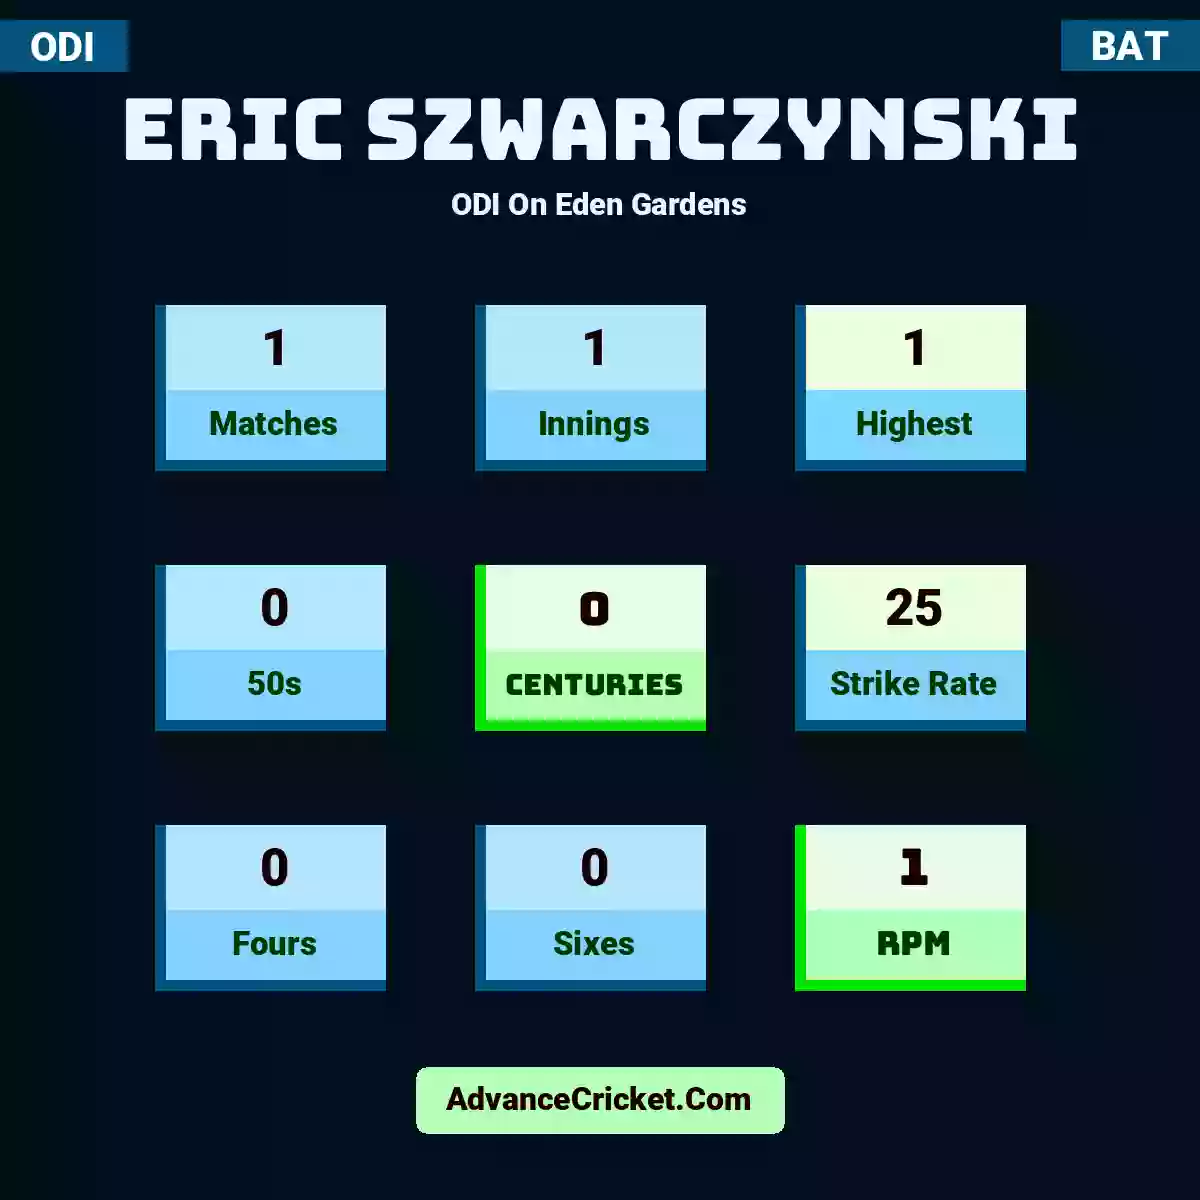 Eric Szwarczynski ODI  On Eden Gardens, Eric Szwarczynski played 1 matches, scored 1 runs as highest, 0 half-centuries, and 0 centuries, with a strike rate of 25. E.Szwarczynski hit 0 fours and 0 sixes, with an RPM of 1.